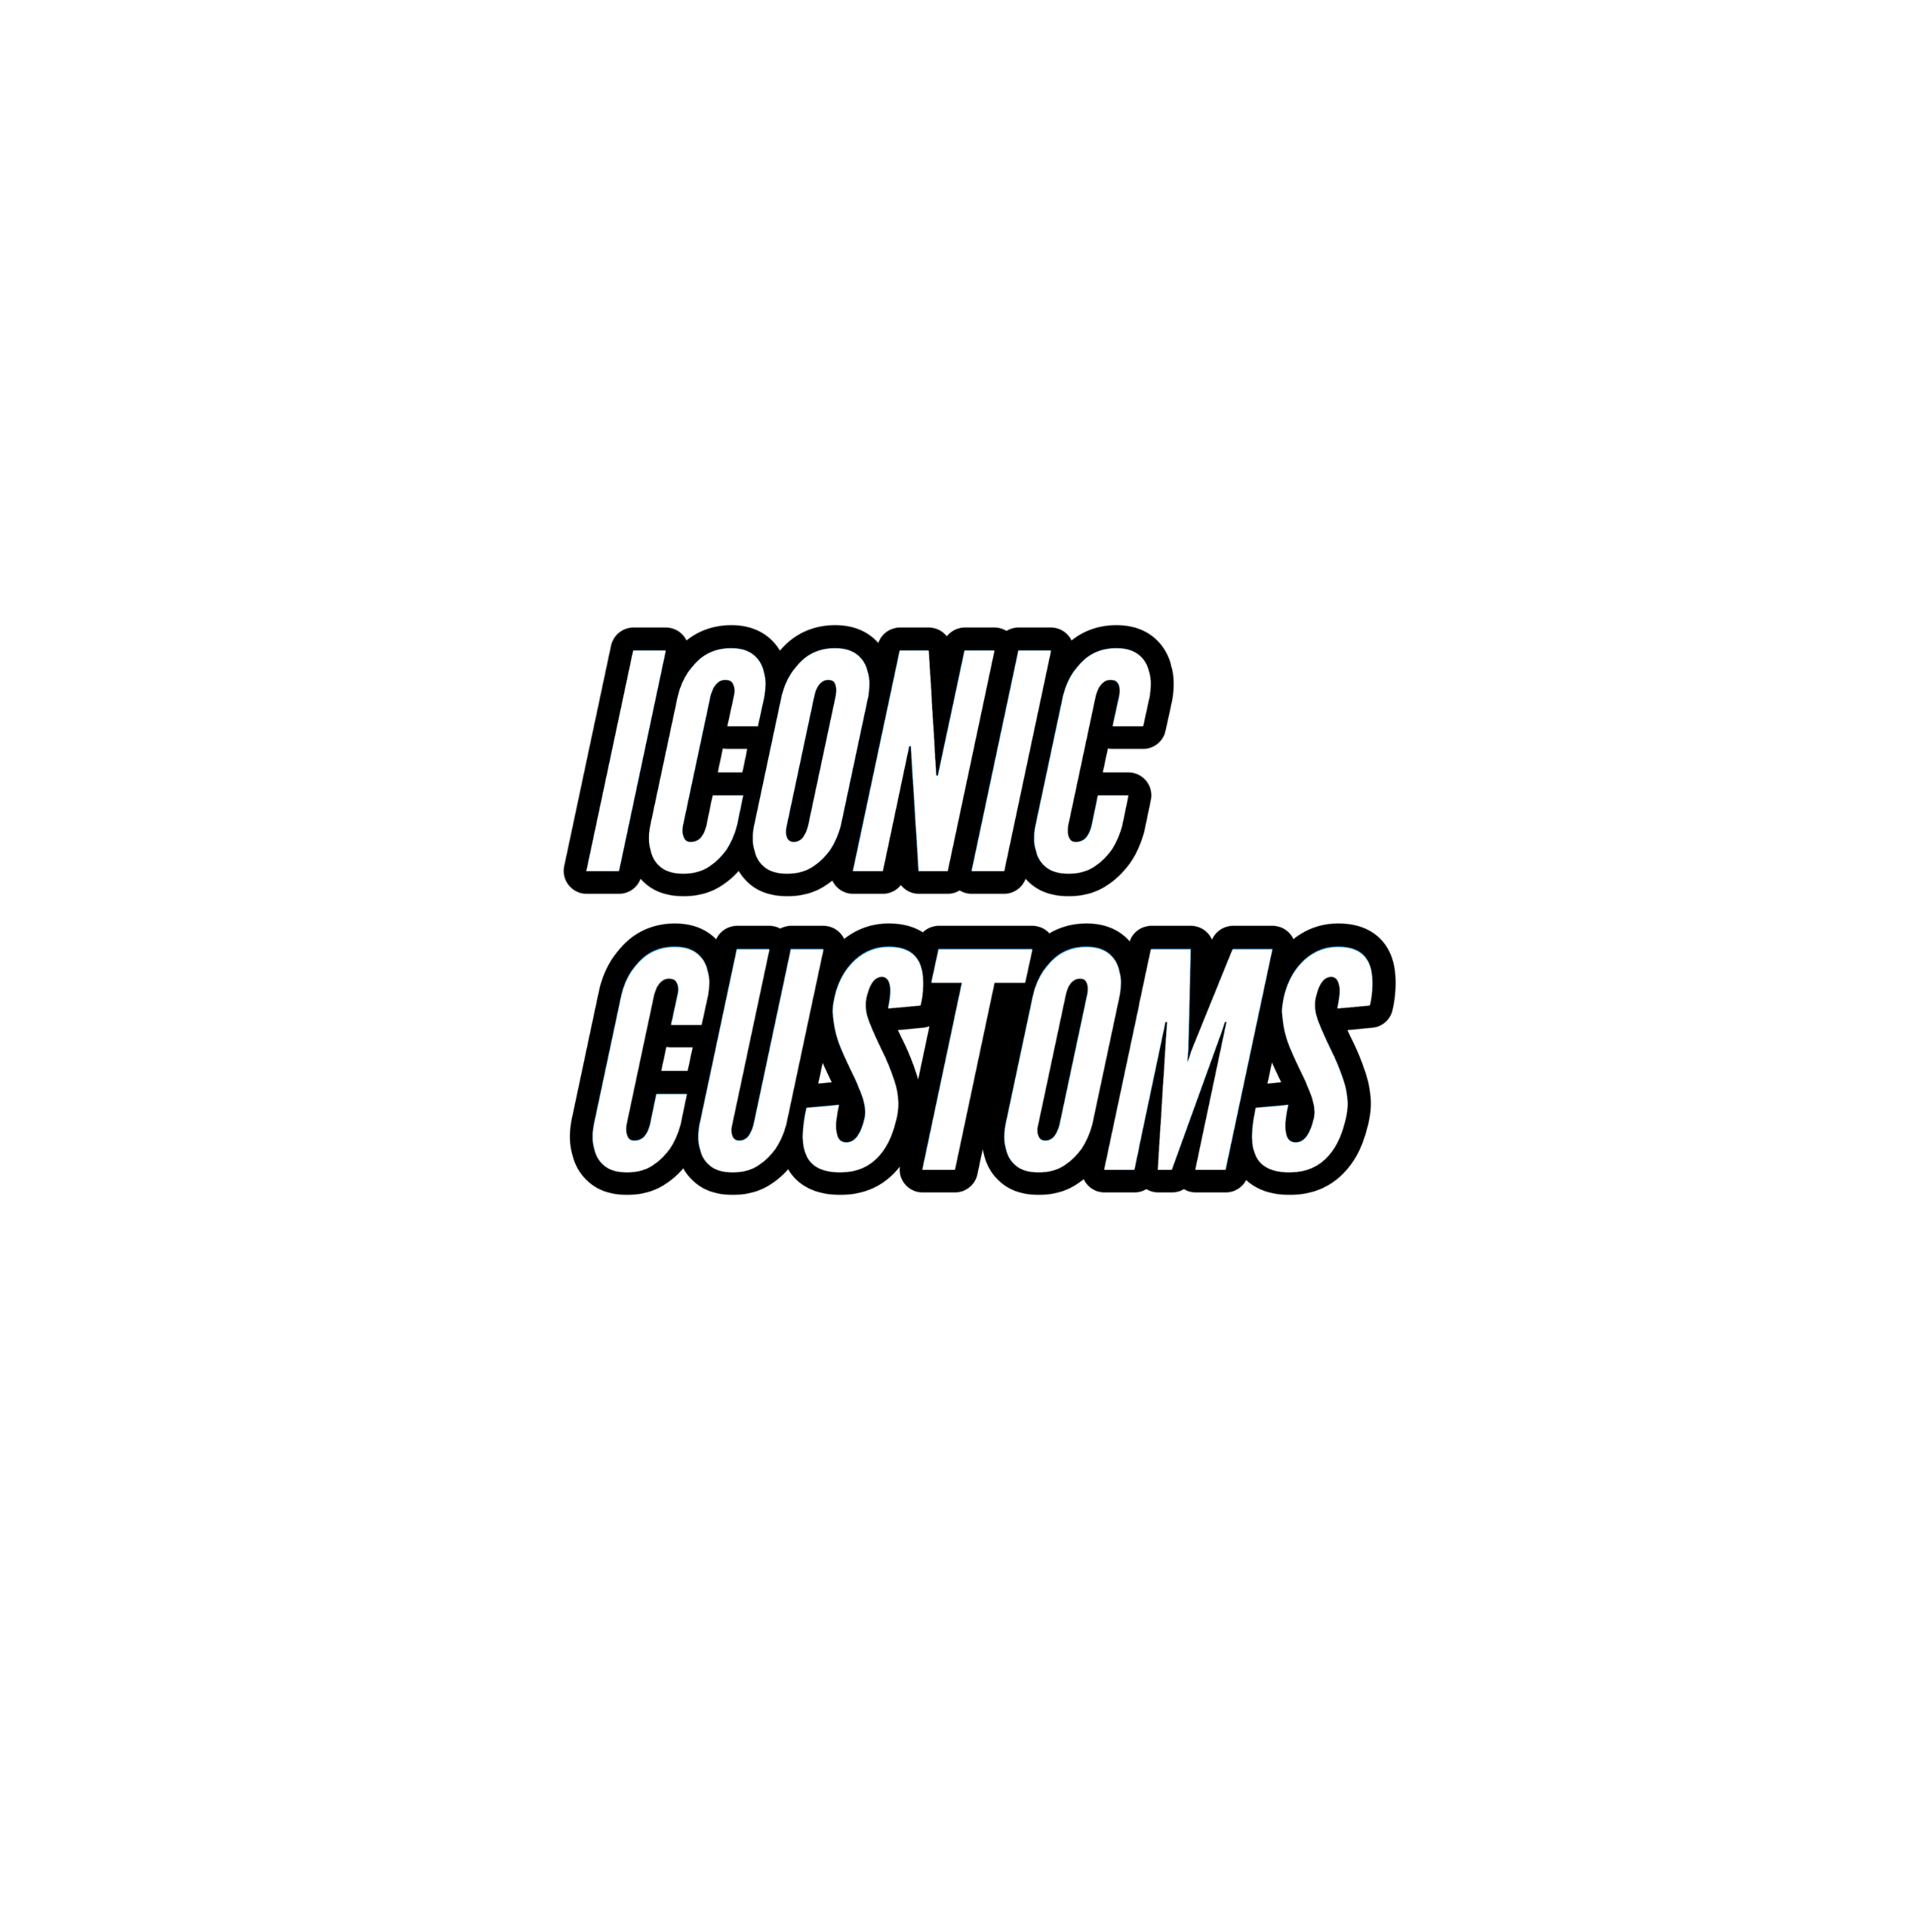 Iconic Customs